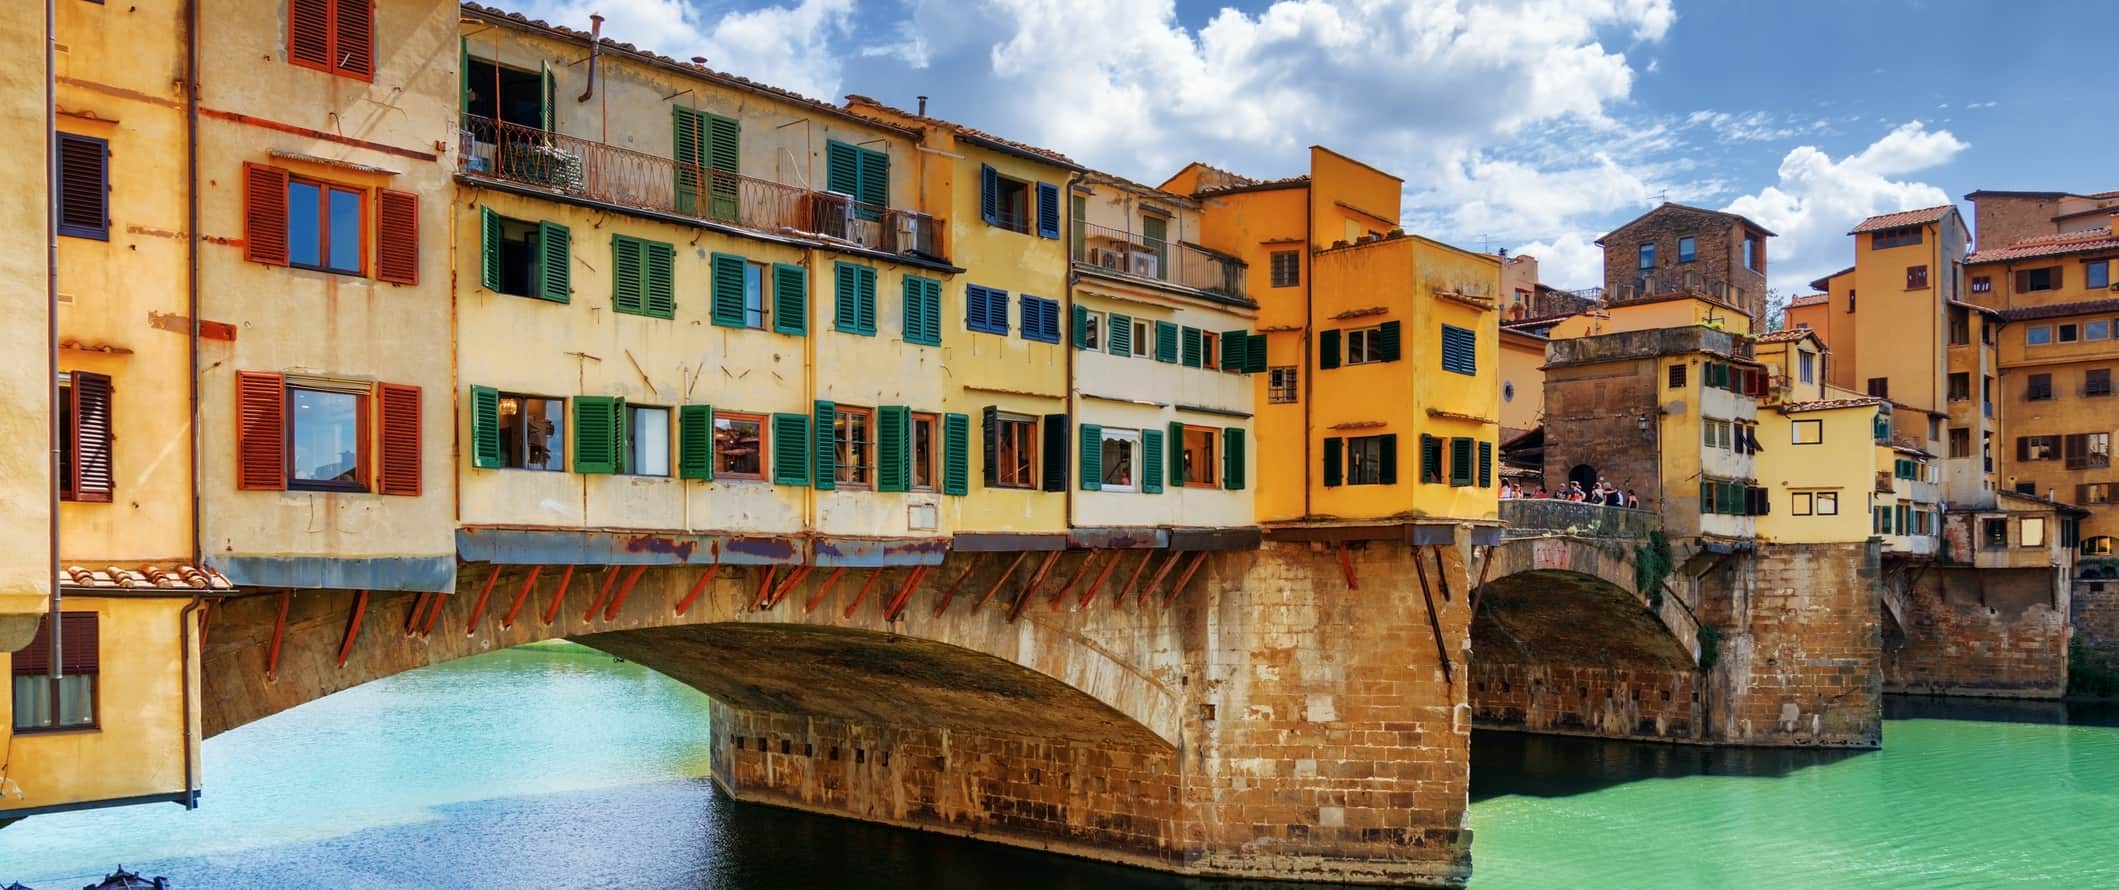 Bright yellow Ponte Vecchio, a medieval bridge in Florence, Italy.